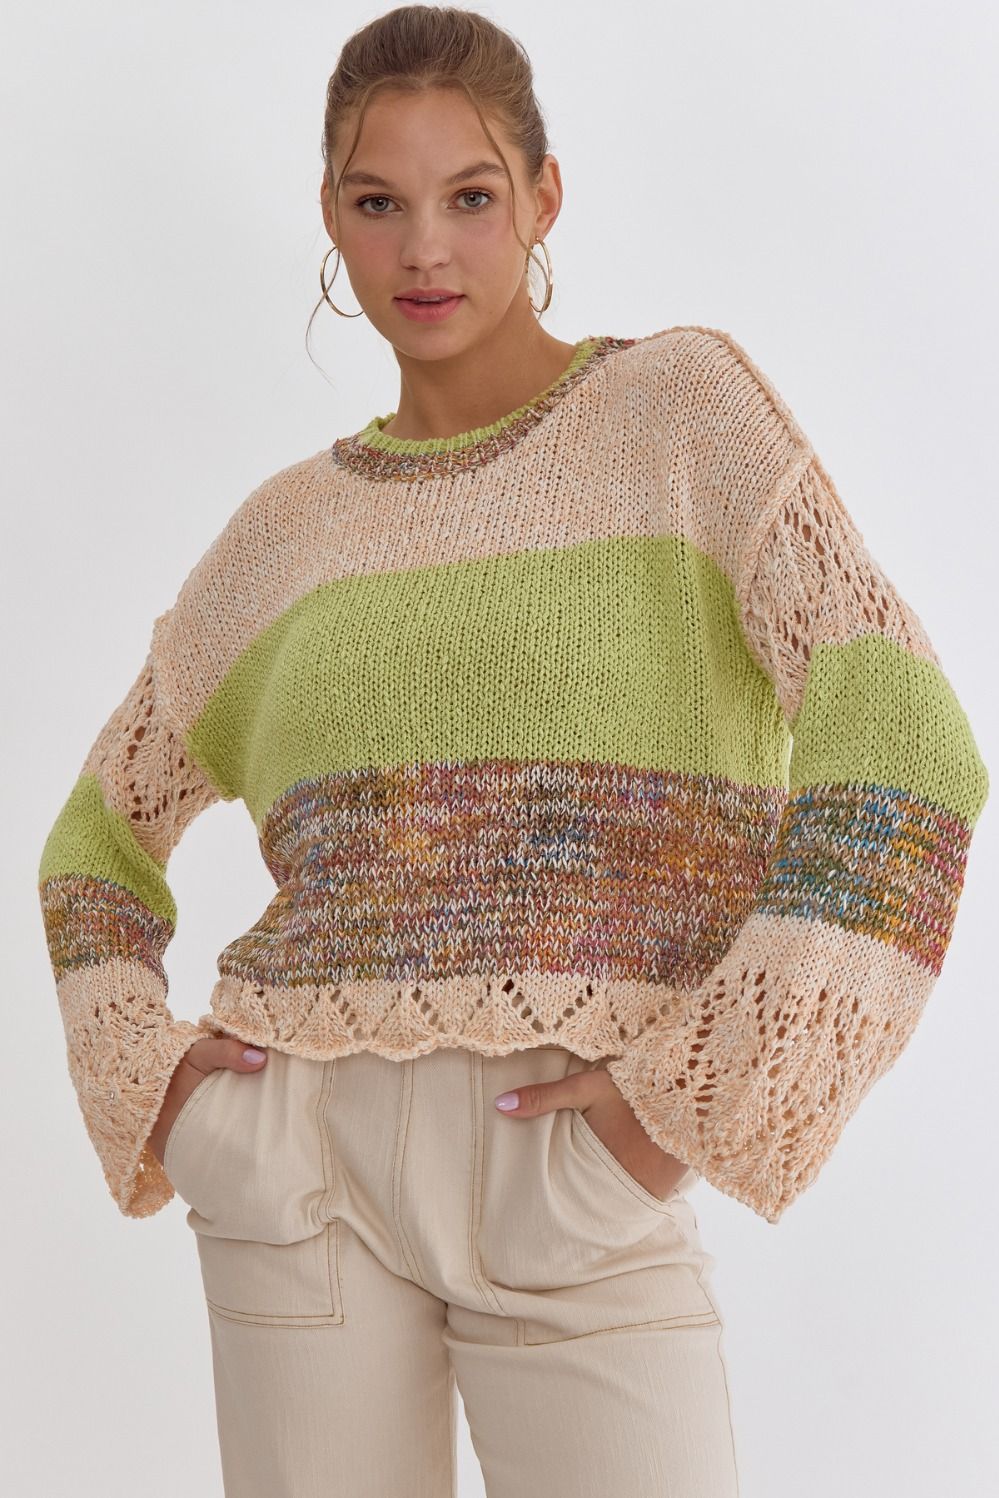 Zara Color Block Crocheted Sweater FINAL SALE